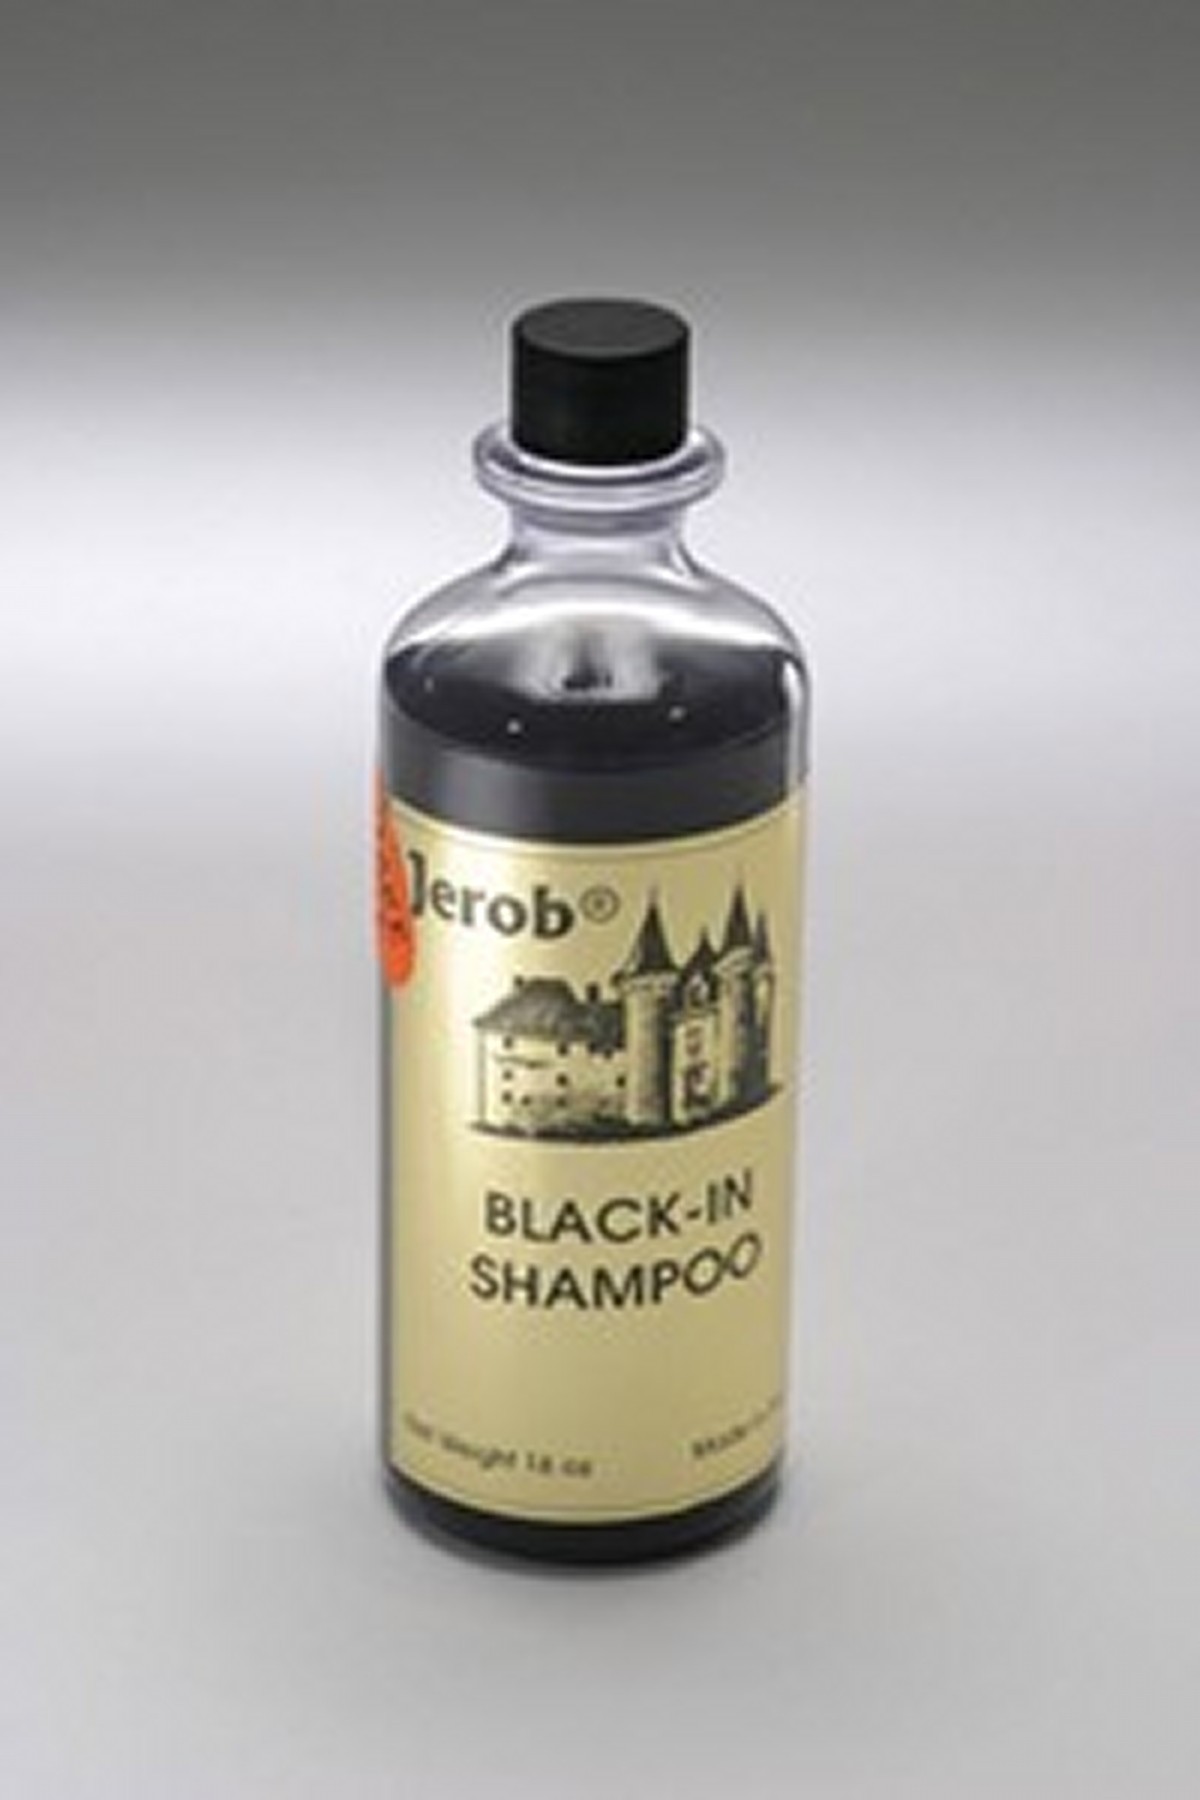 Jerob Shampoo Black-In 236 ml